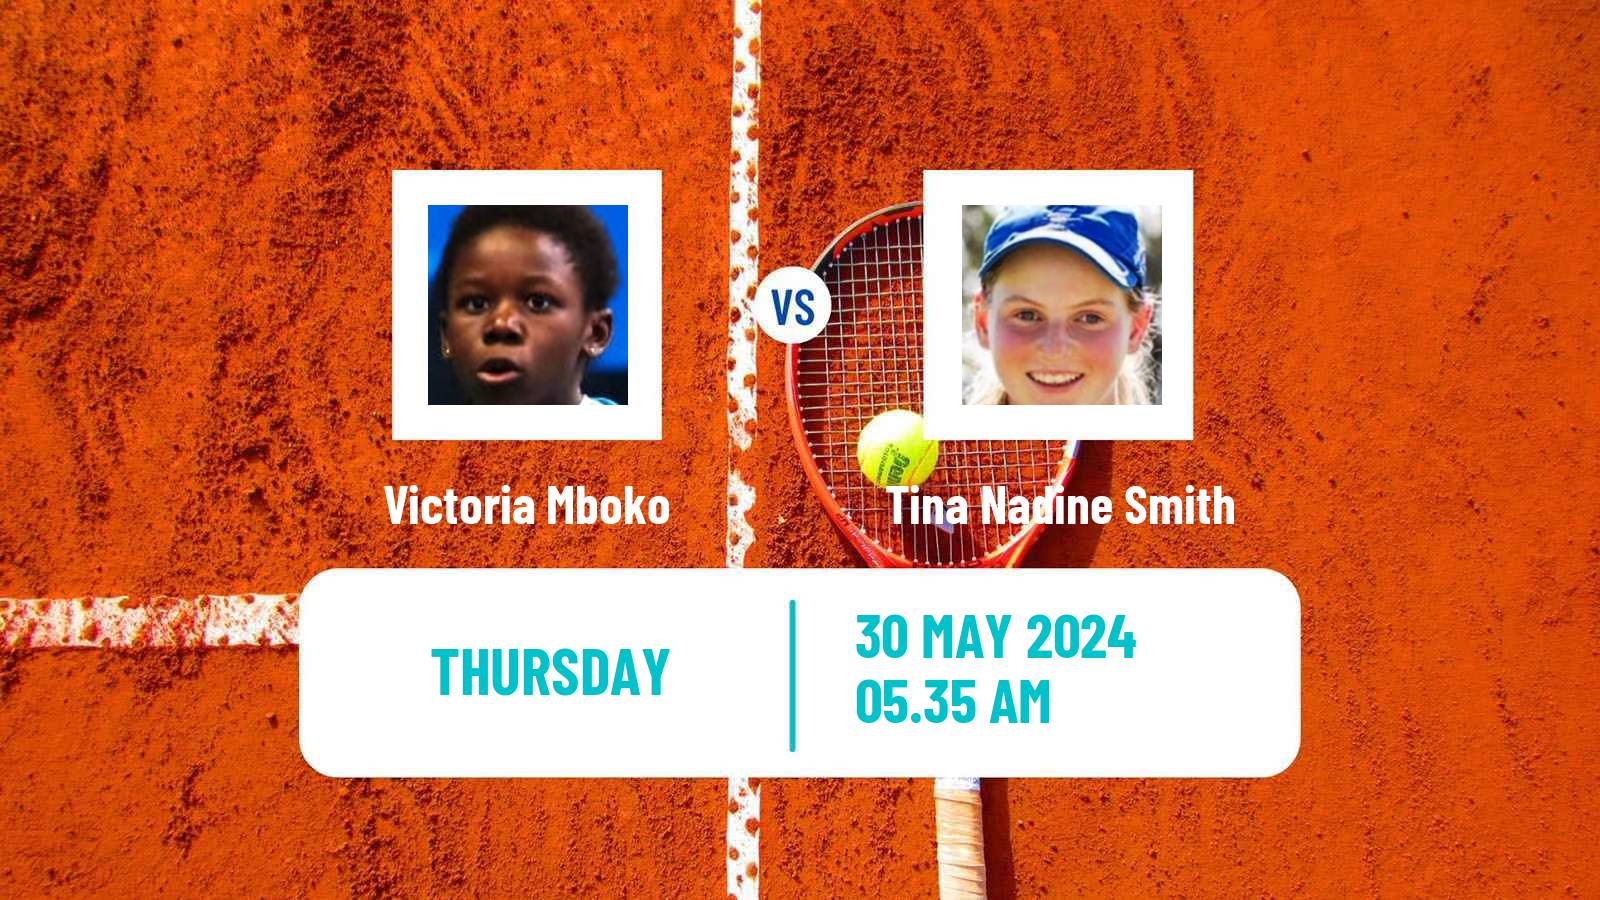 Tennis ITF W50 Otocec 2 Women Victoria Mboko - Tina Nadine Smith